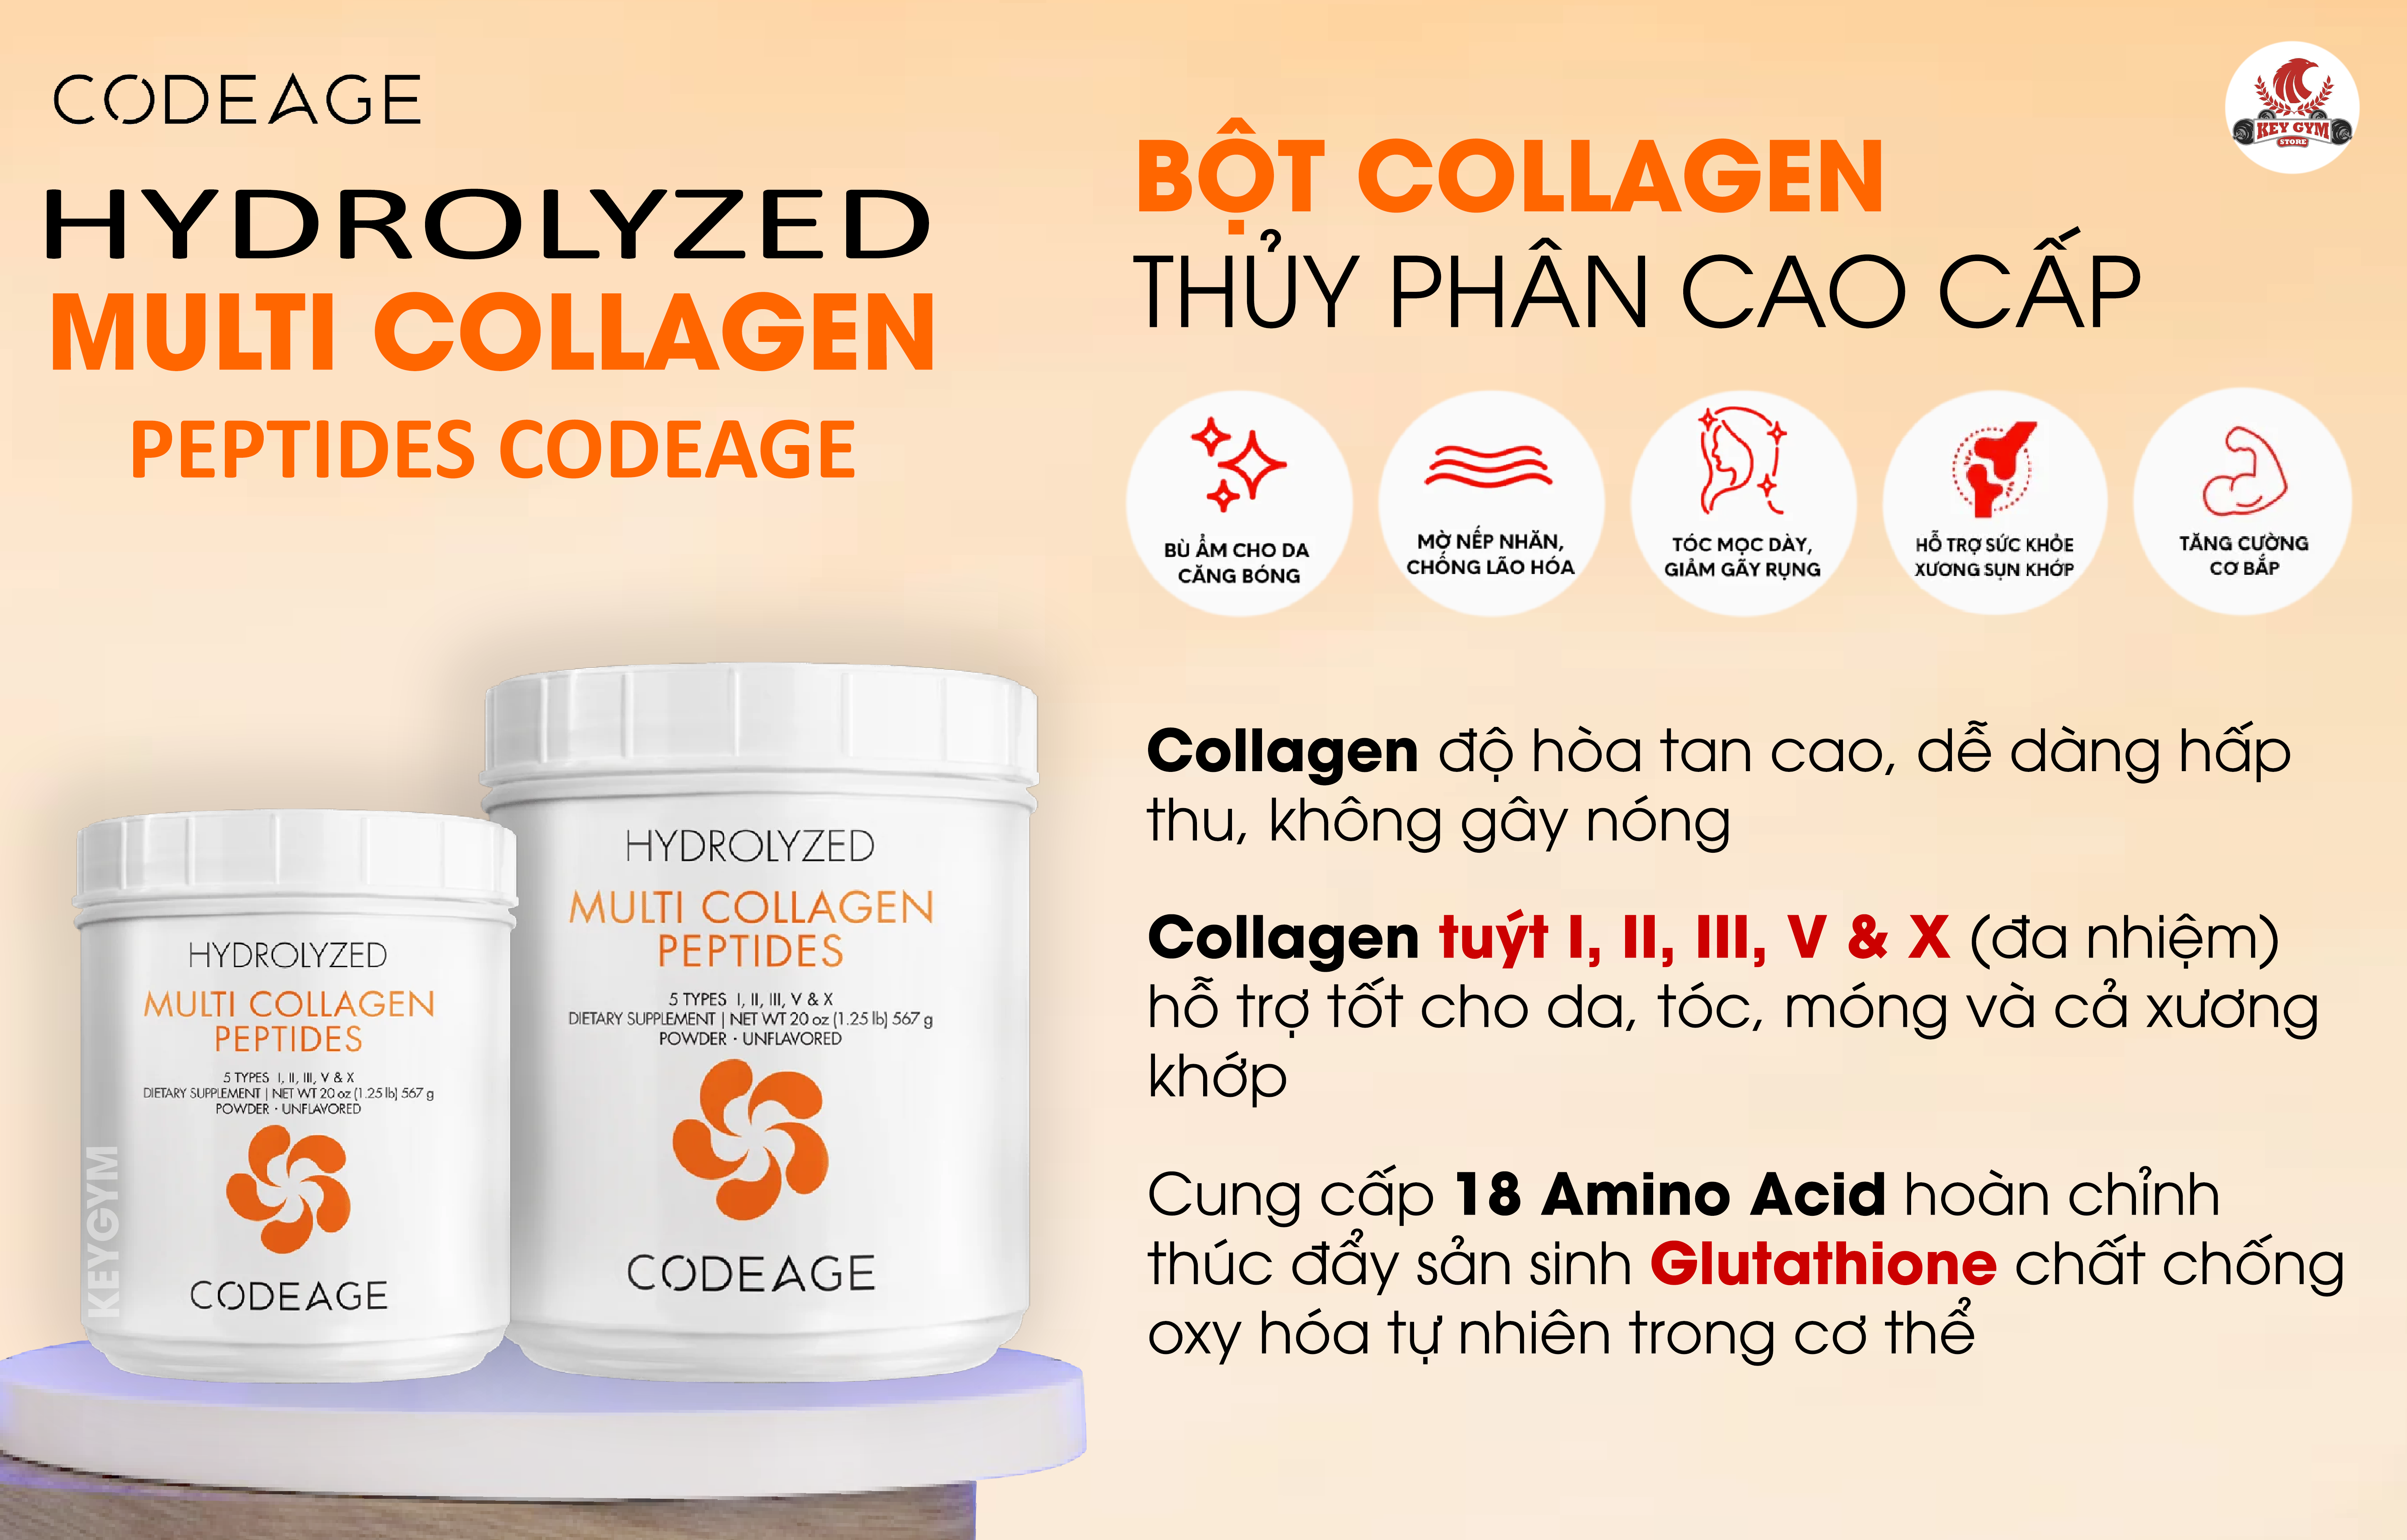 Codeage Hydrolyzed Multi Collagen